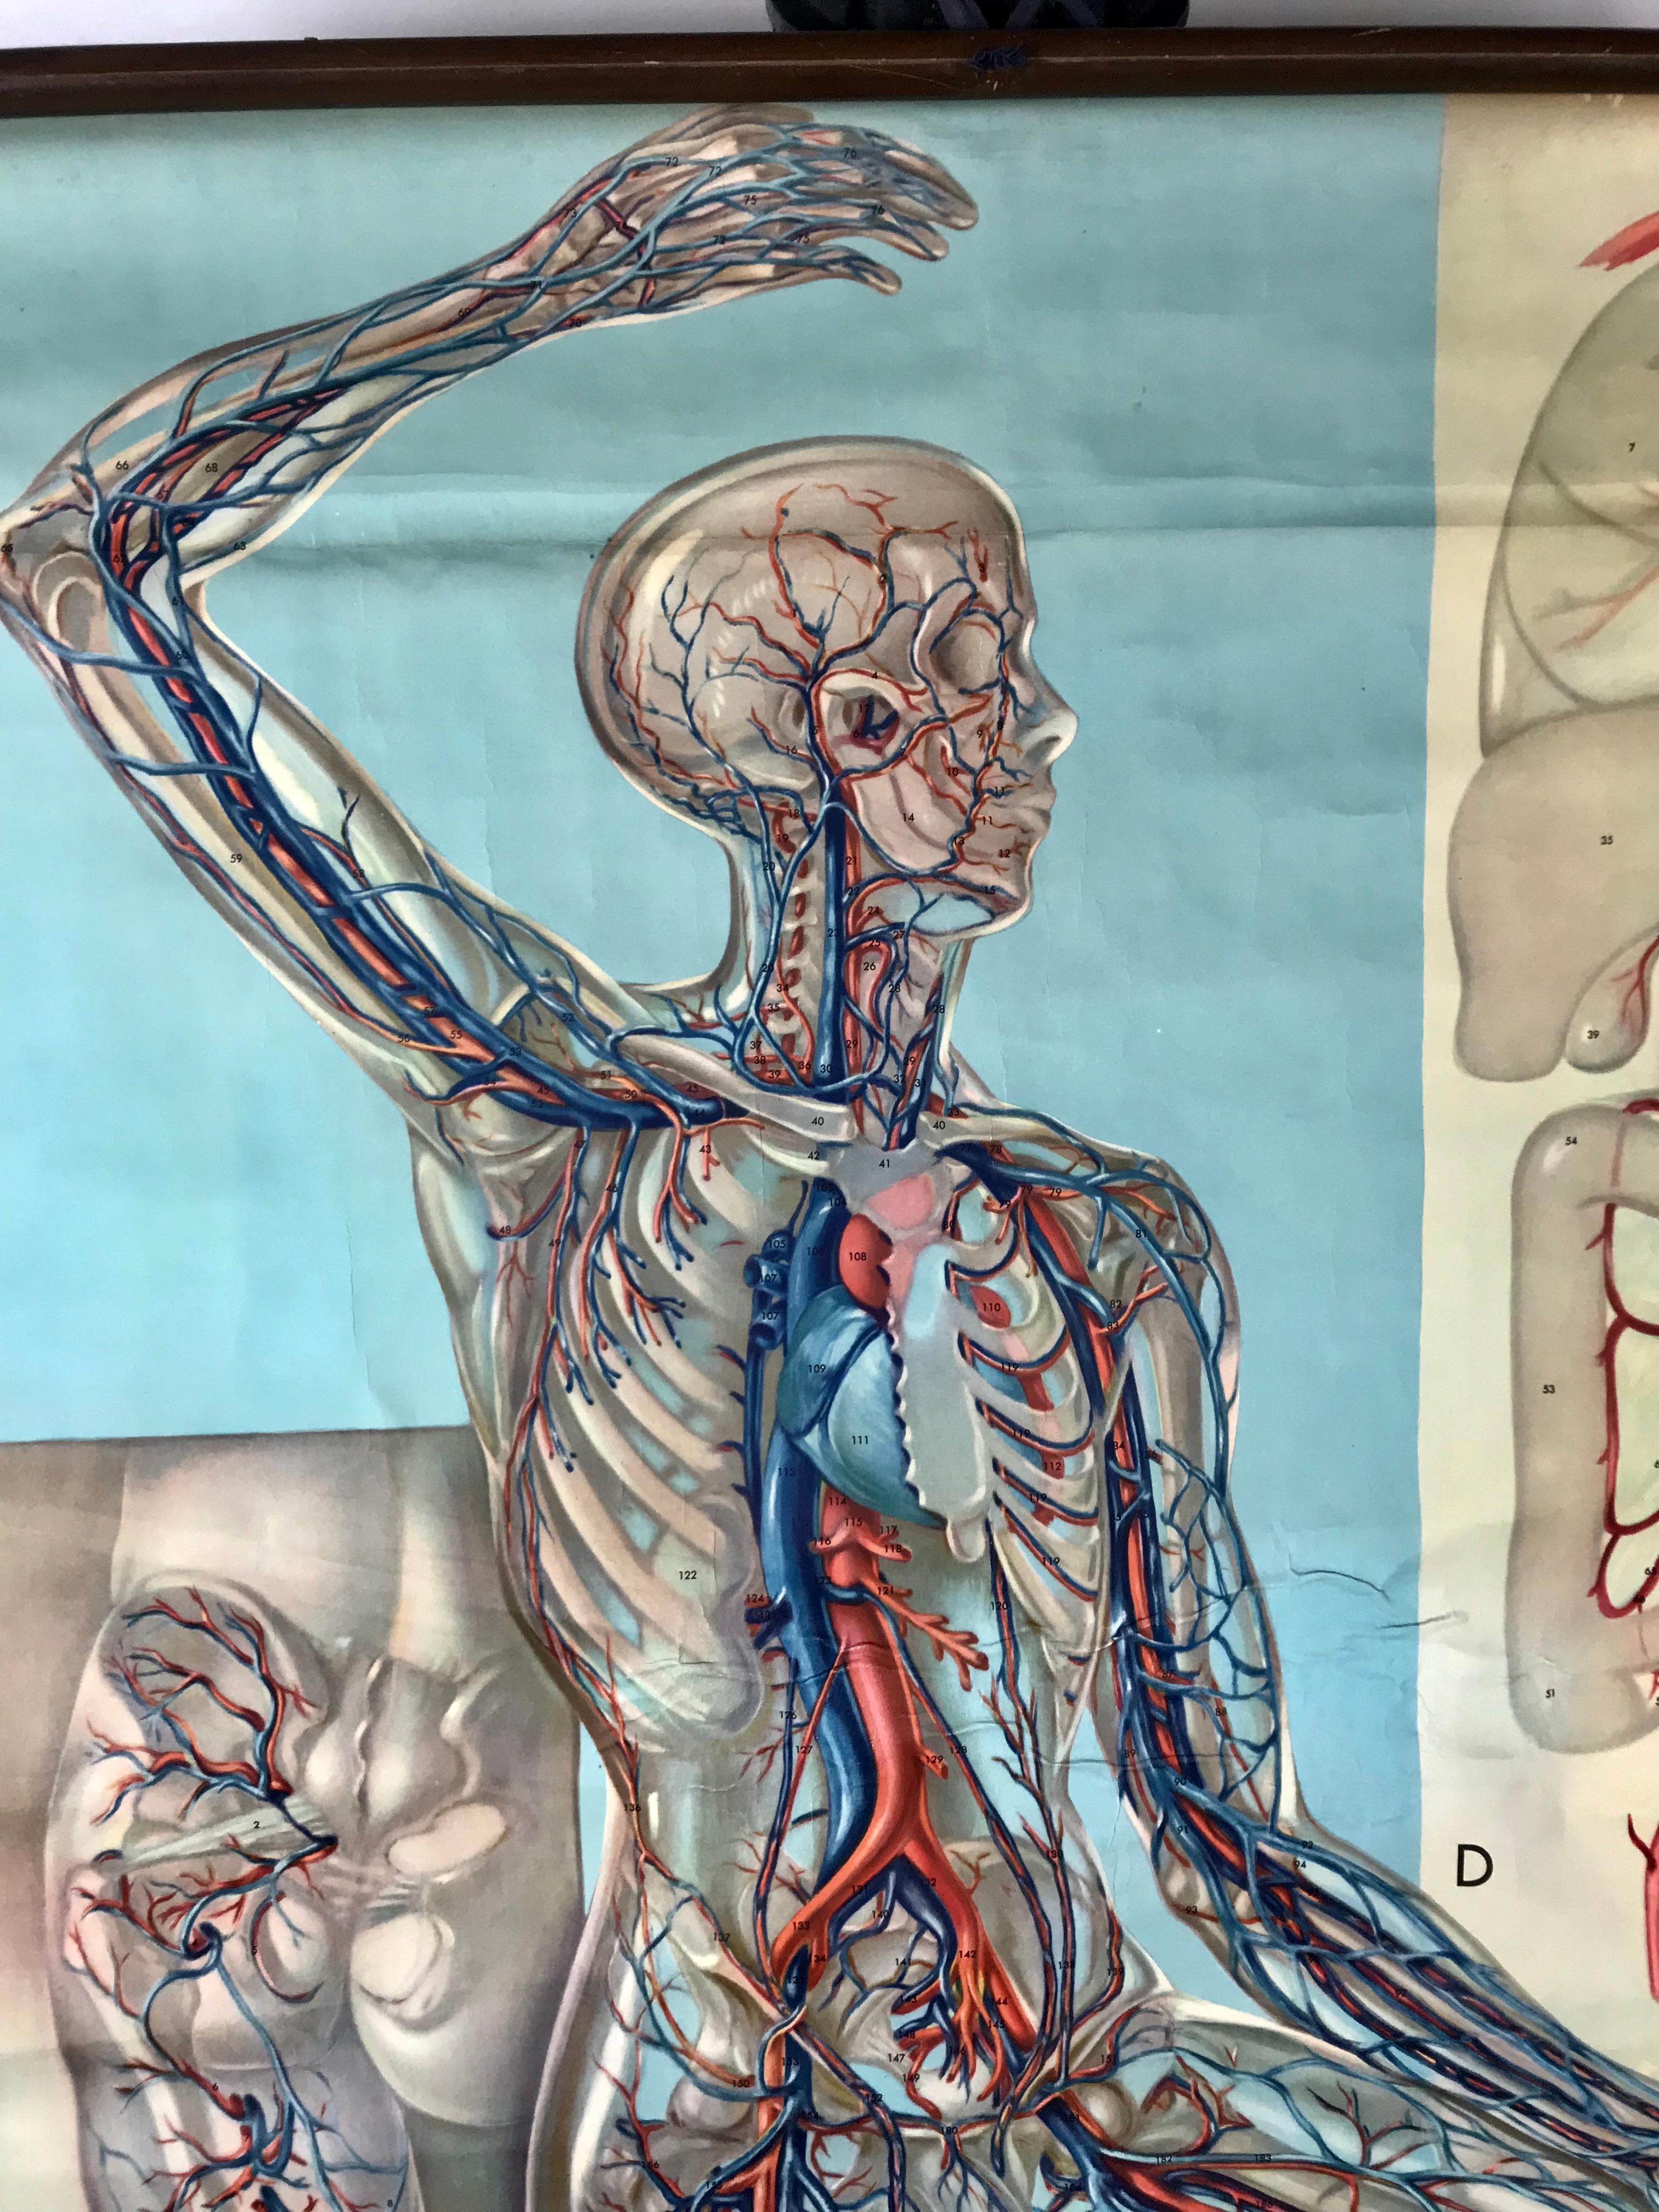 1938 pull down anatomy chart, Denoyer-Geppert. Artist P.M. Lariviere. KL3 circulatory system. Stunning image, screenprint on linen.